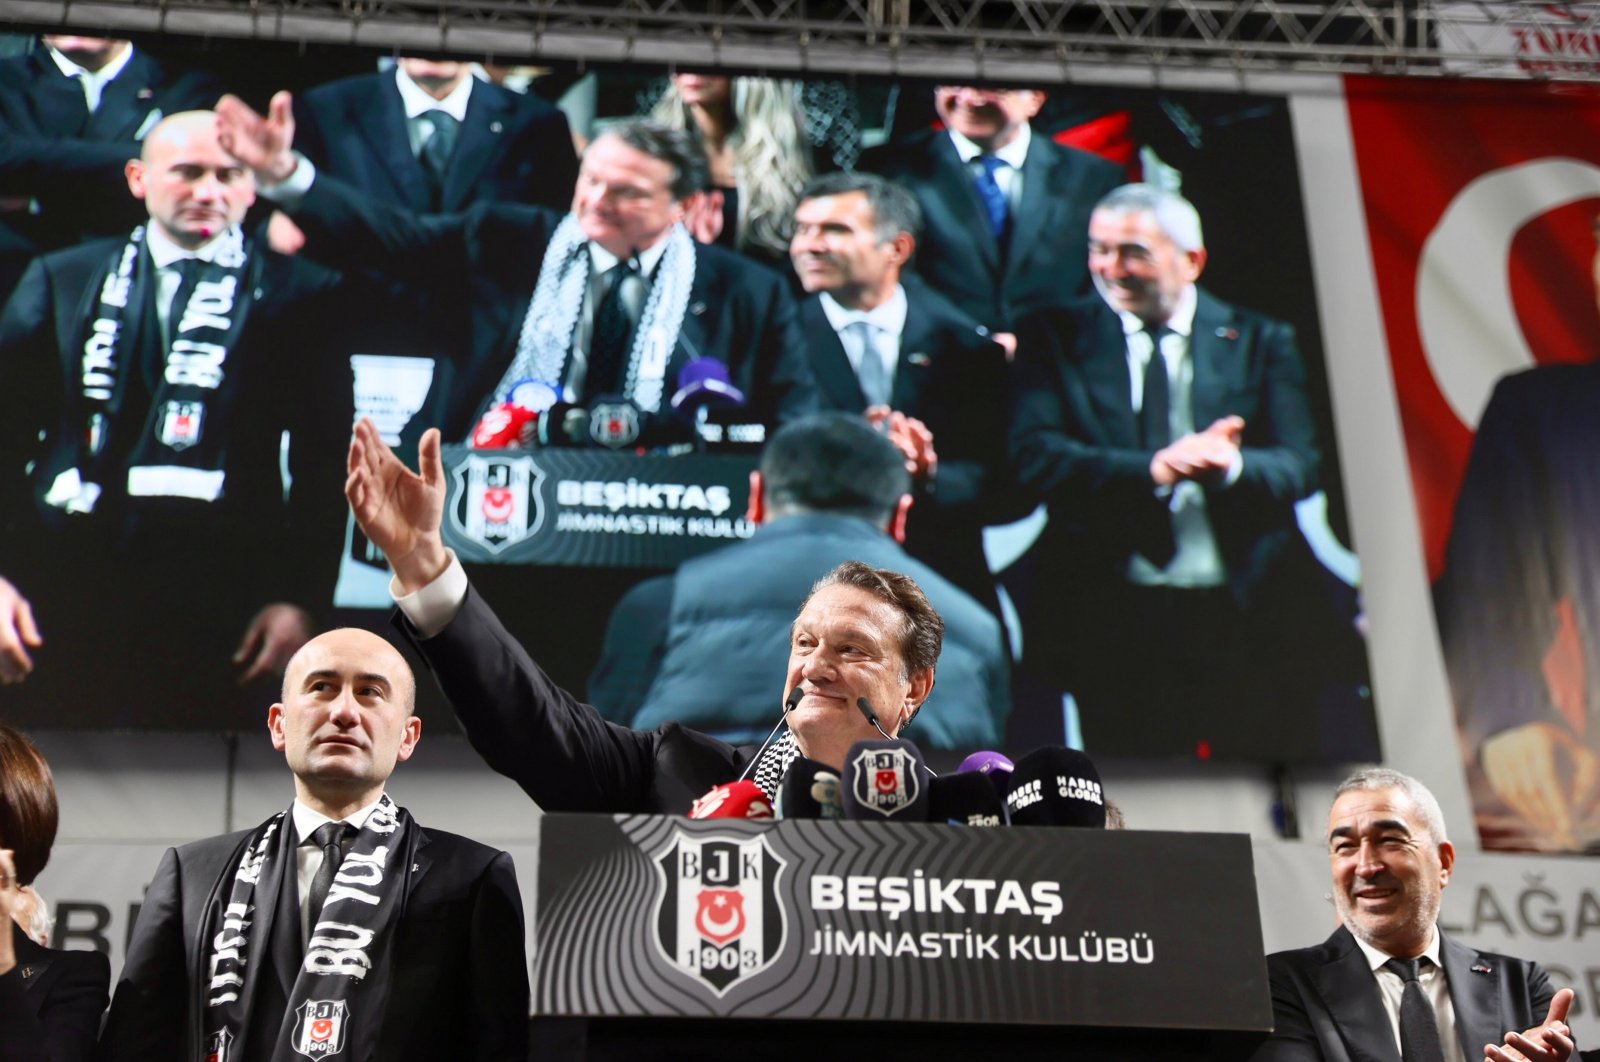 Beşiktaş welcome new era as Hasan Arat slam dunks into presidency